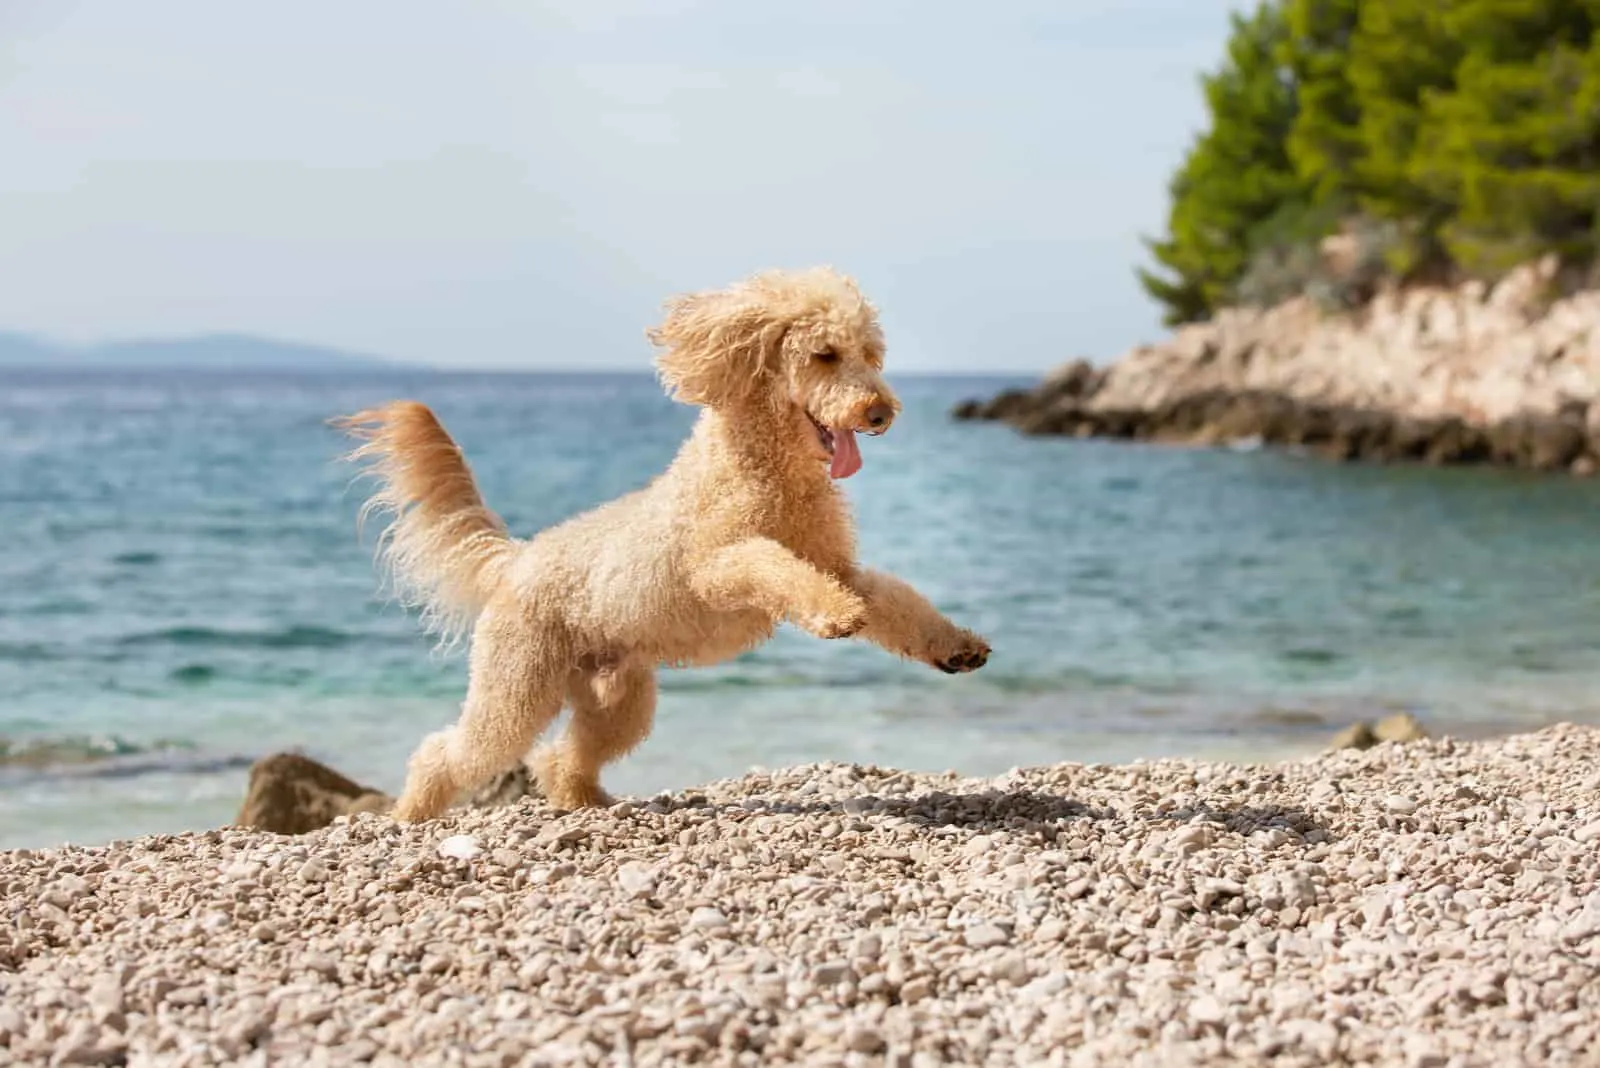 Poodle runs along the beach